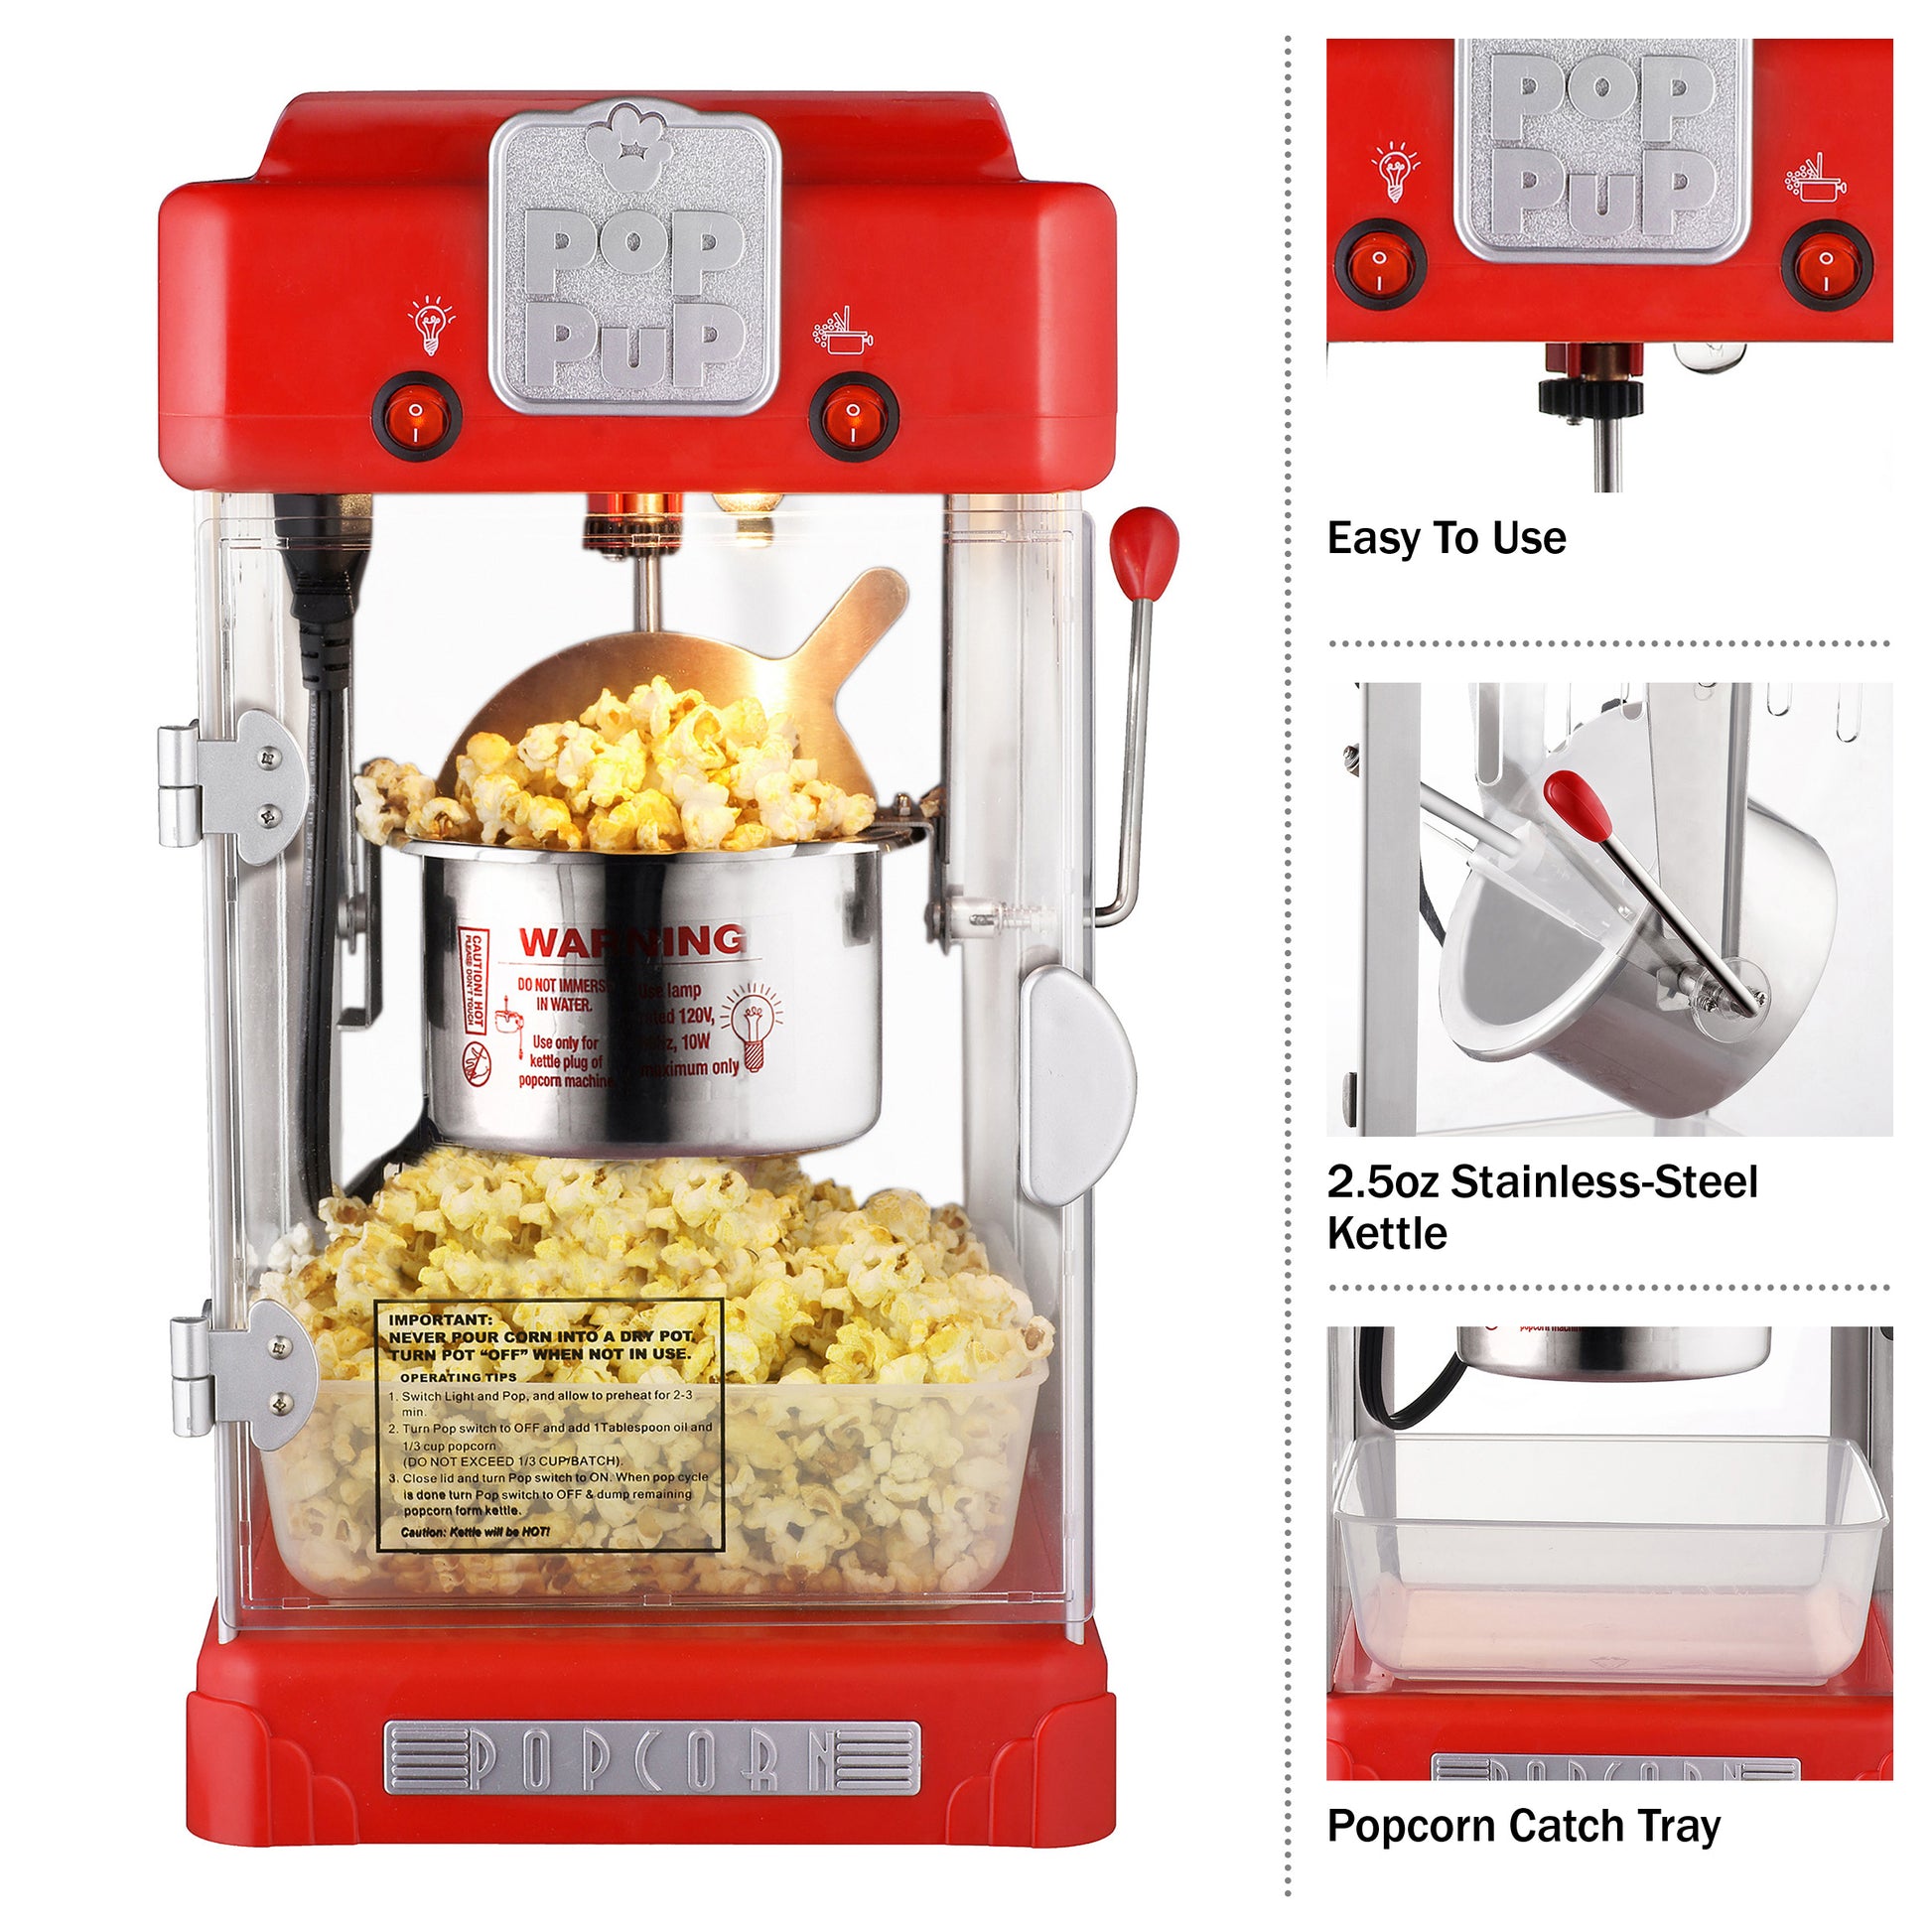 Top 5 Best Popcorn Machines  Popcorn makers review 